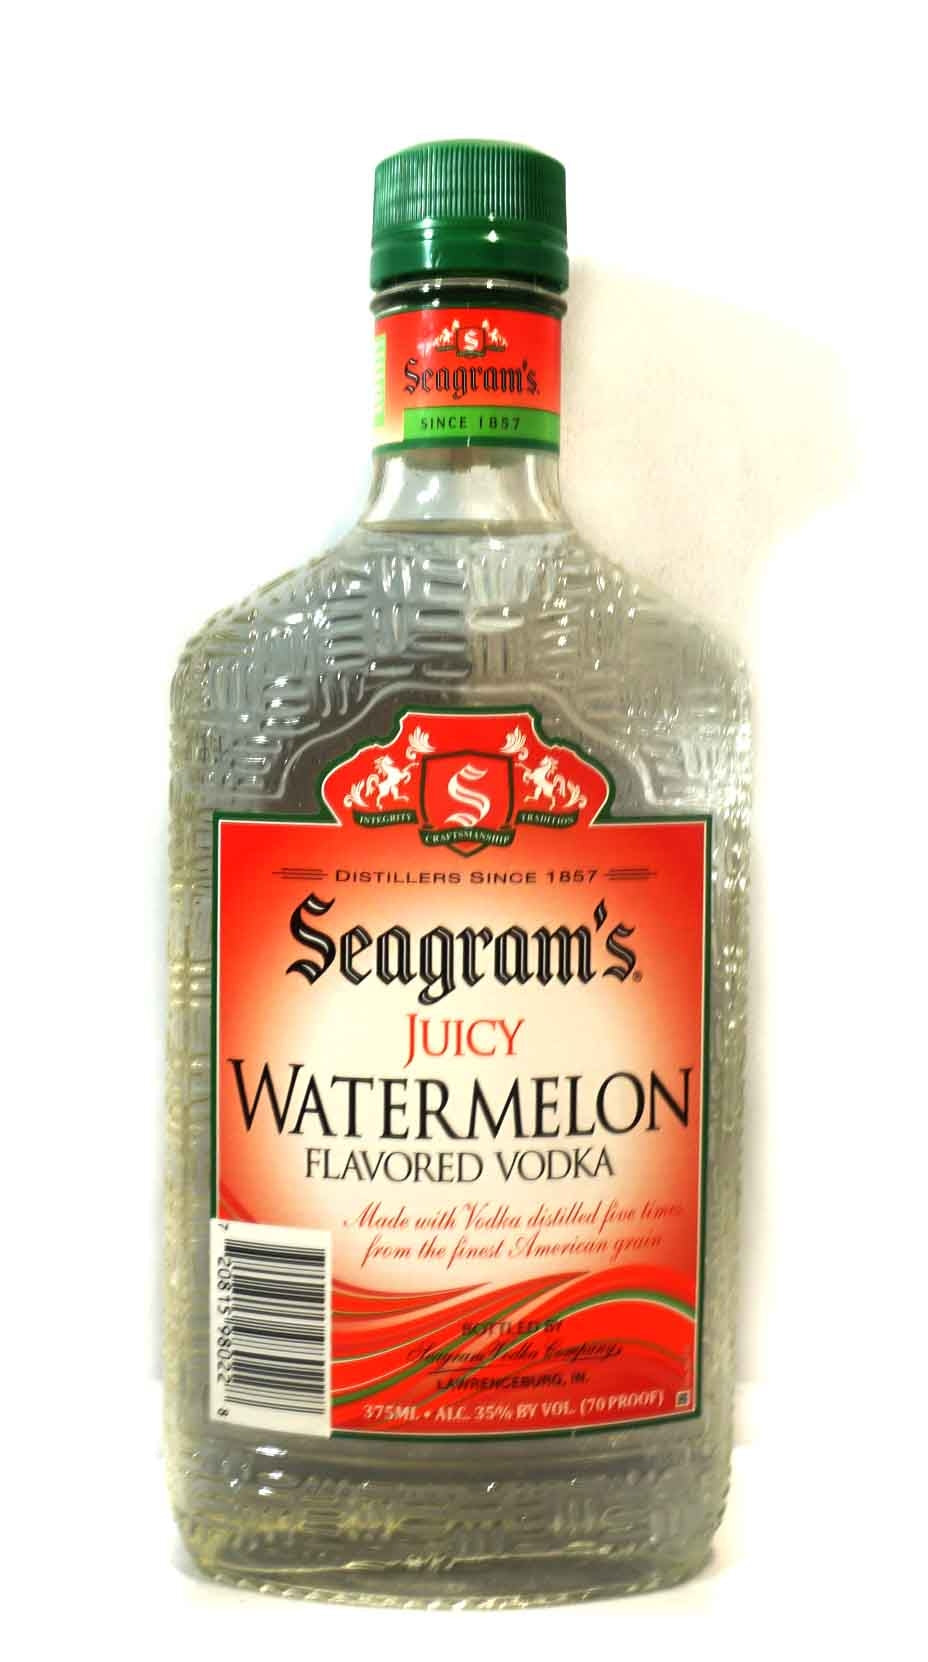 SEAGRAM'S VODKA JUICY WATERMELON 375ML - Remedy Liquor